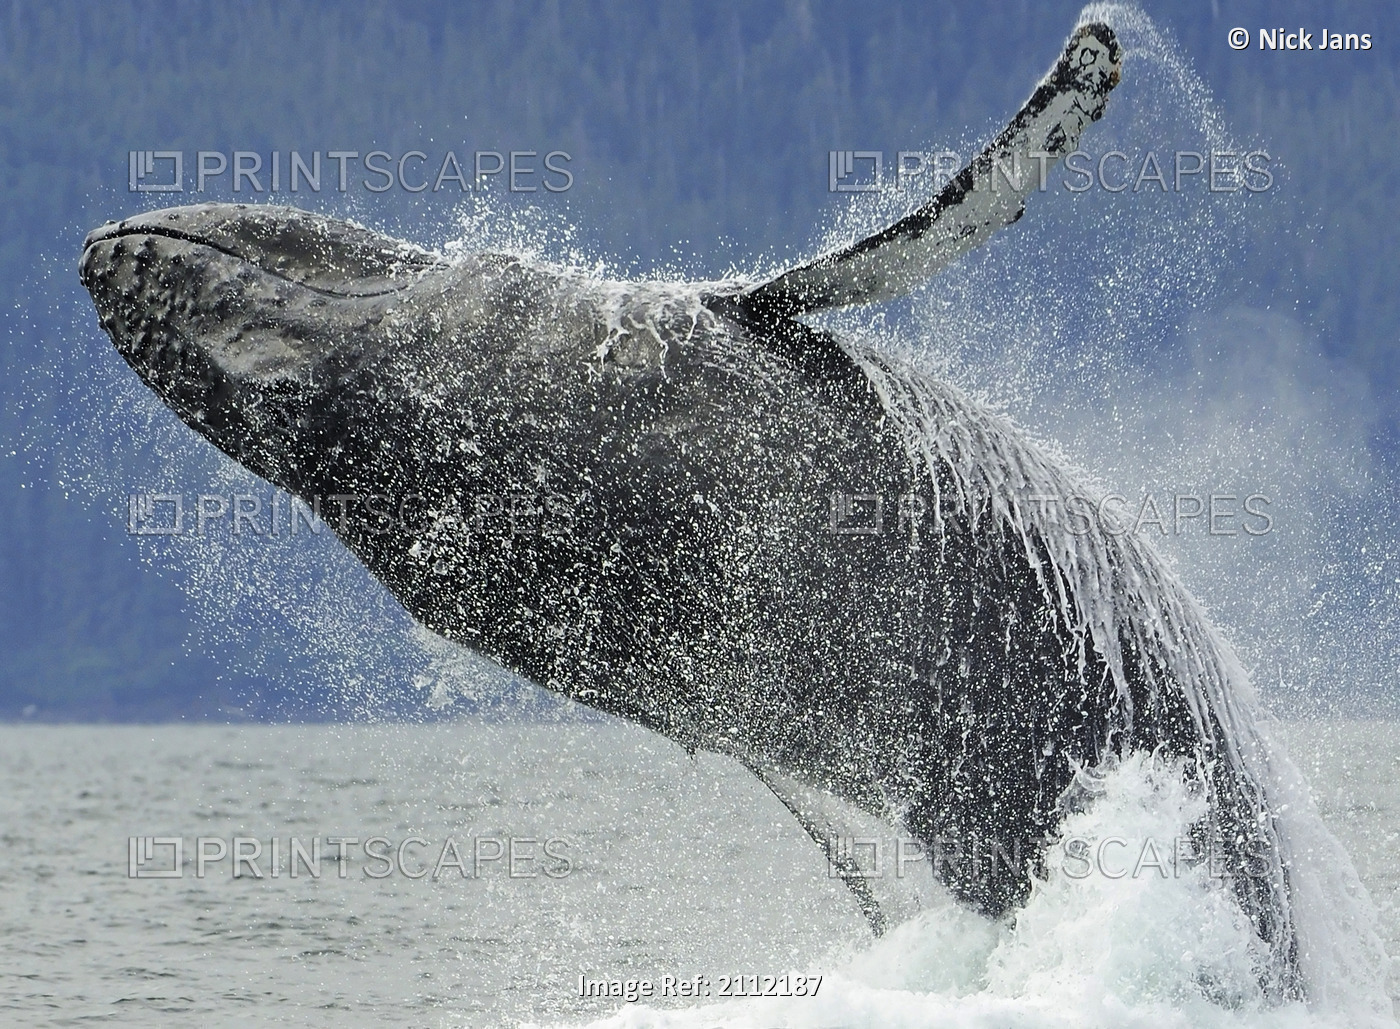 Humpback Whale Breaching Near Juneau During Summer In Southeast Alaska